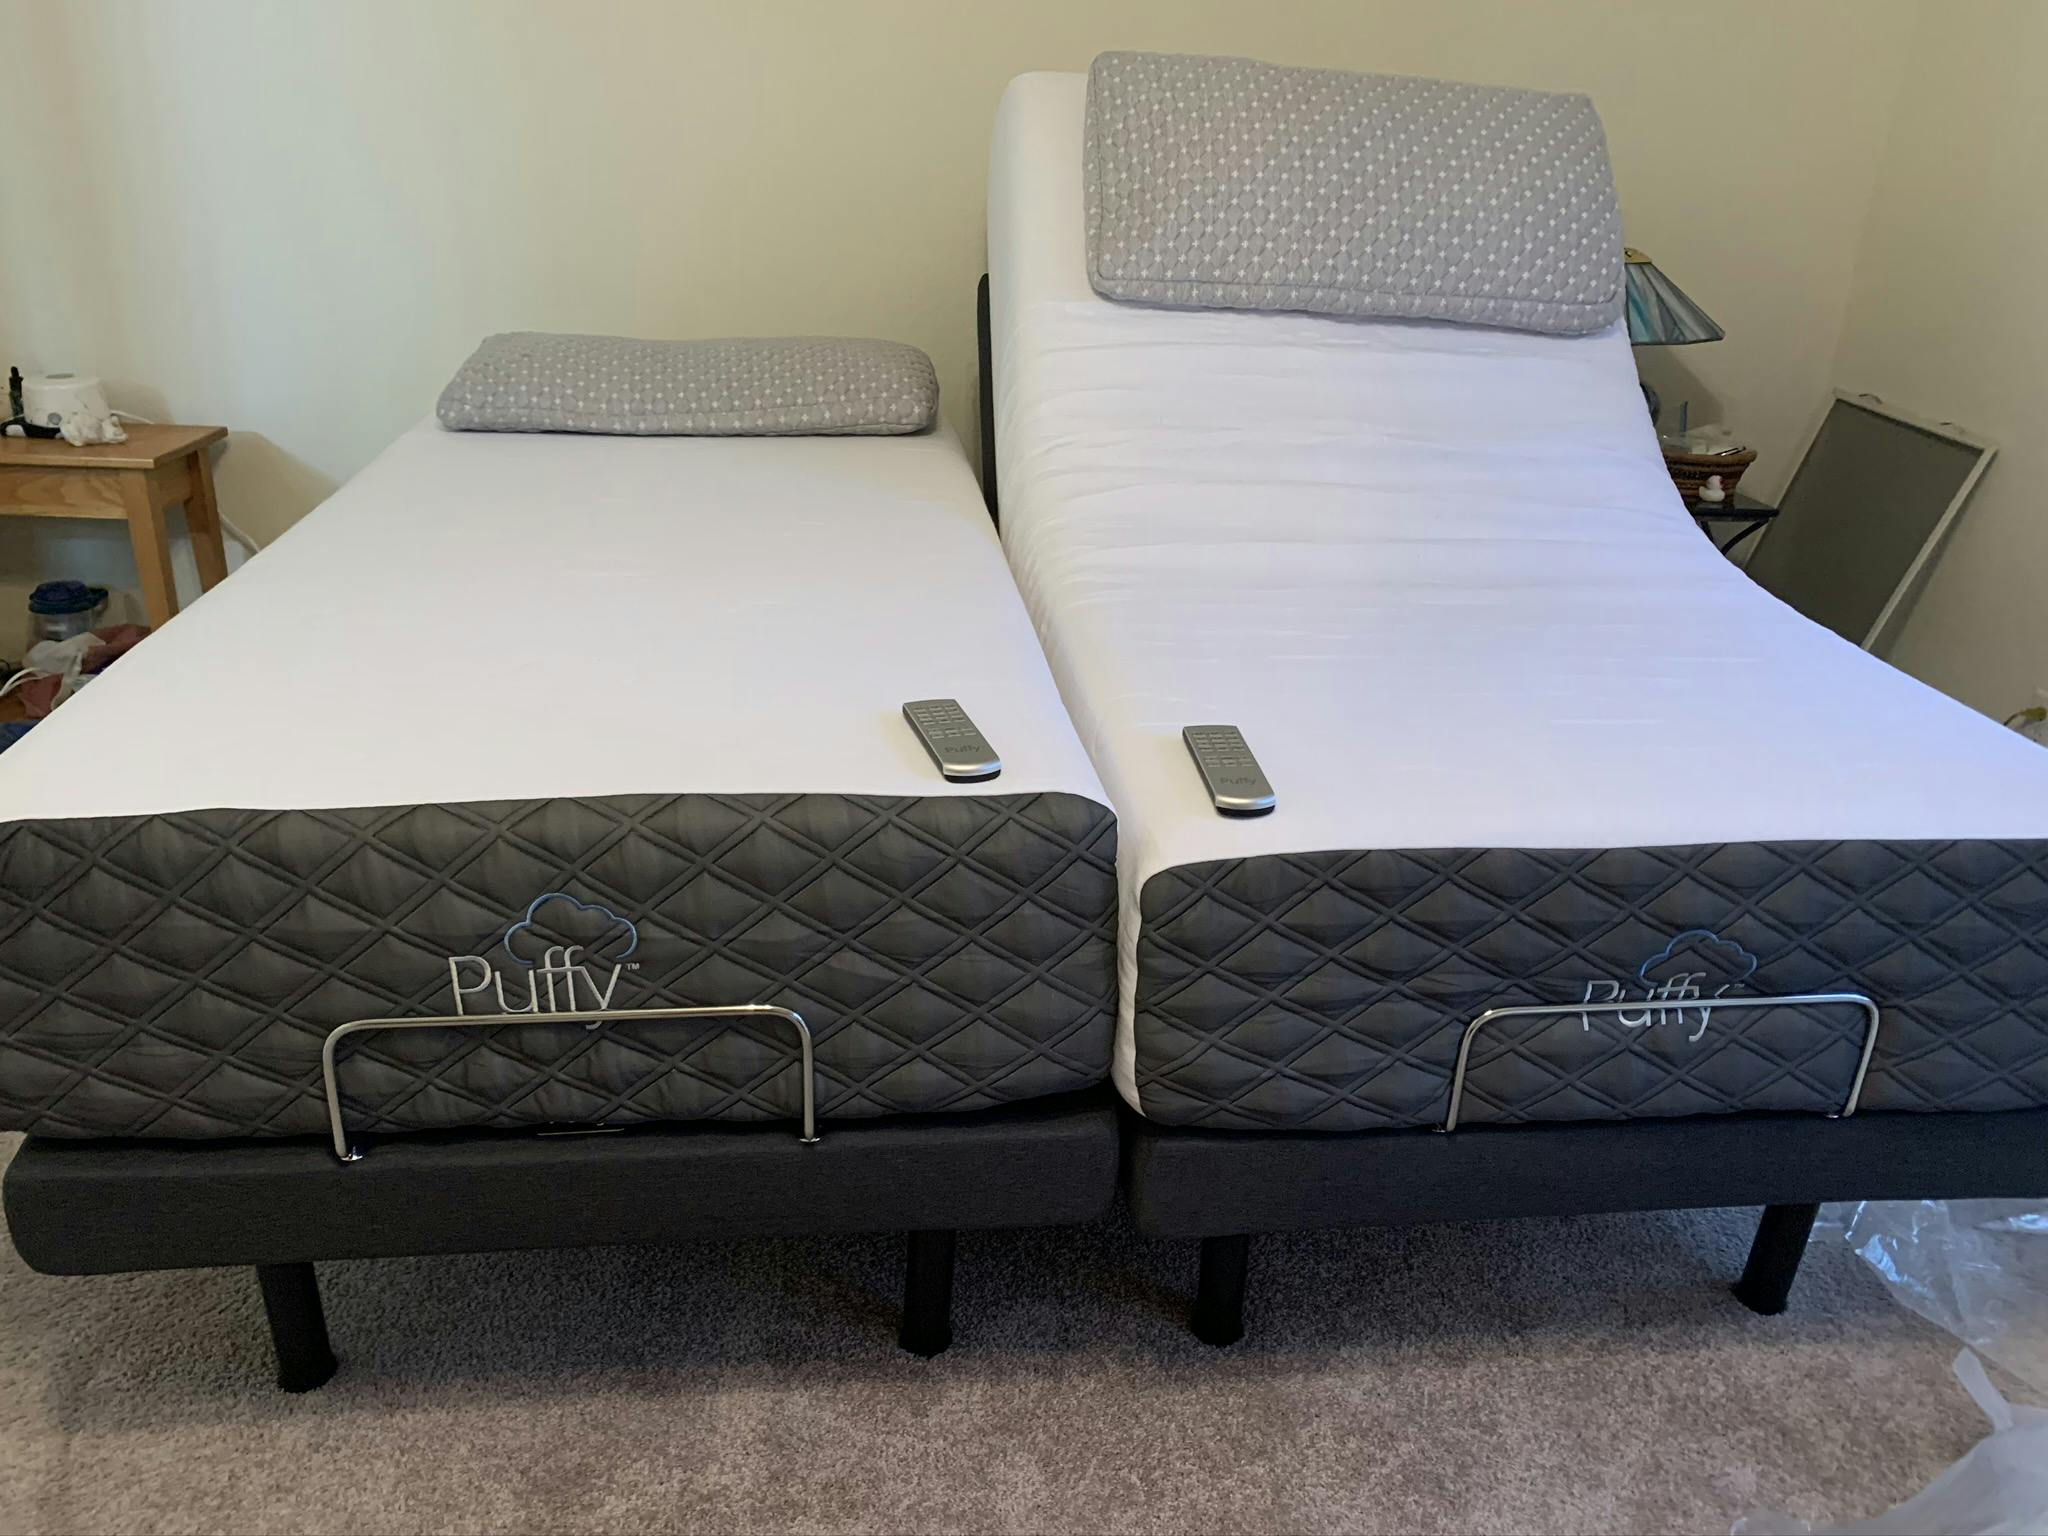 mattress for puffy split king